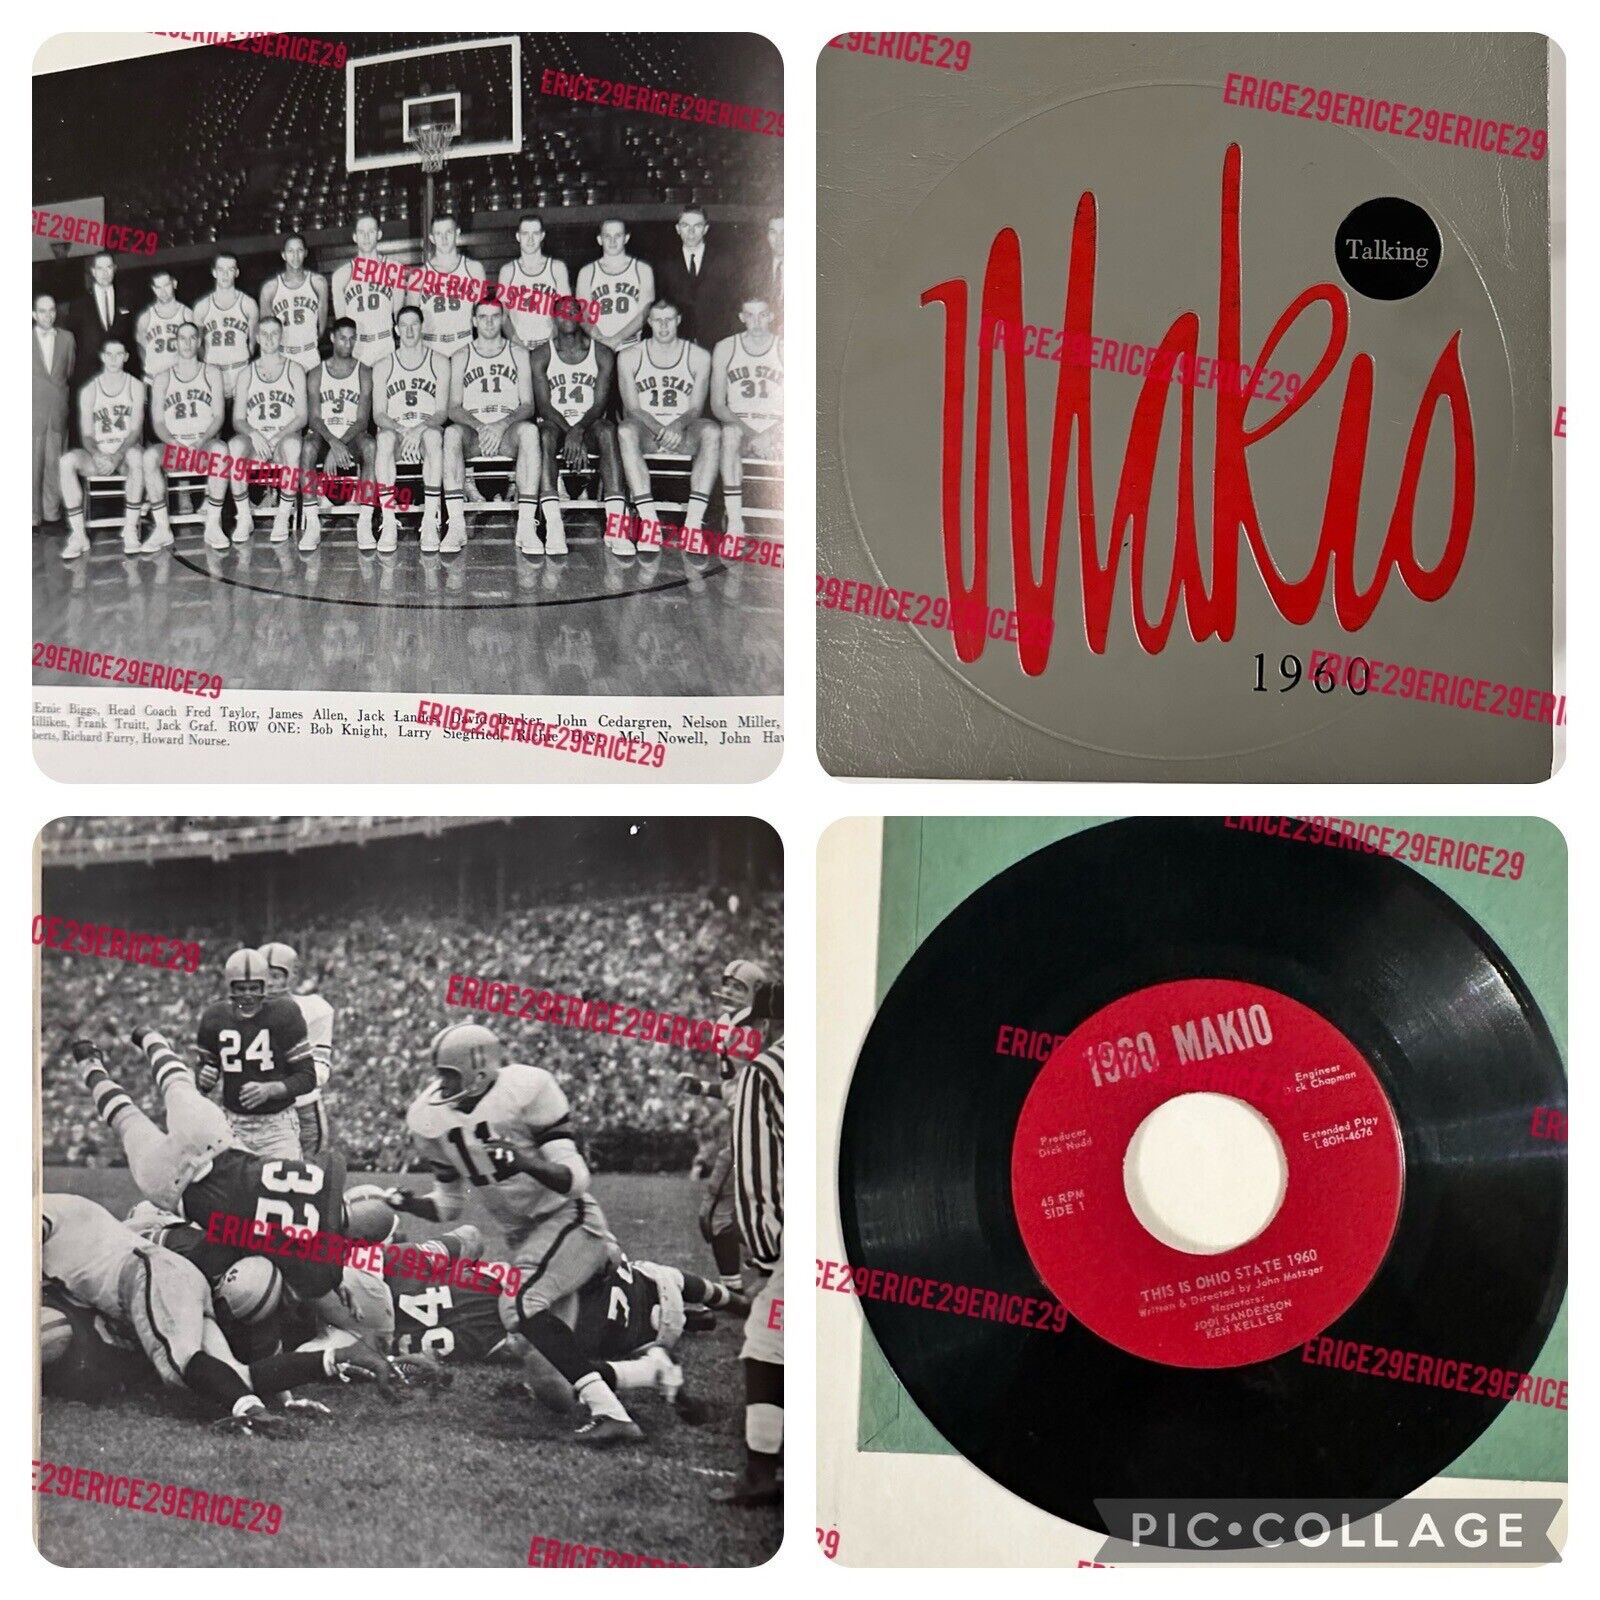 1960 Ohio State University College Talking Makio Yearbook w/ 45rpm Record